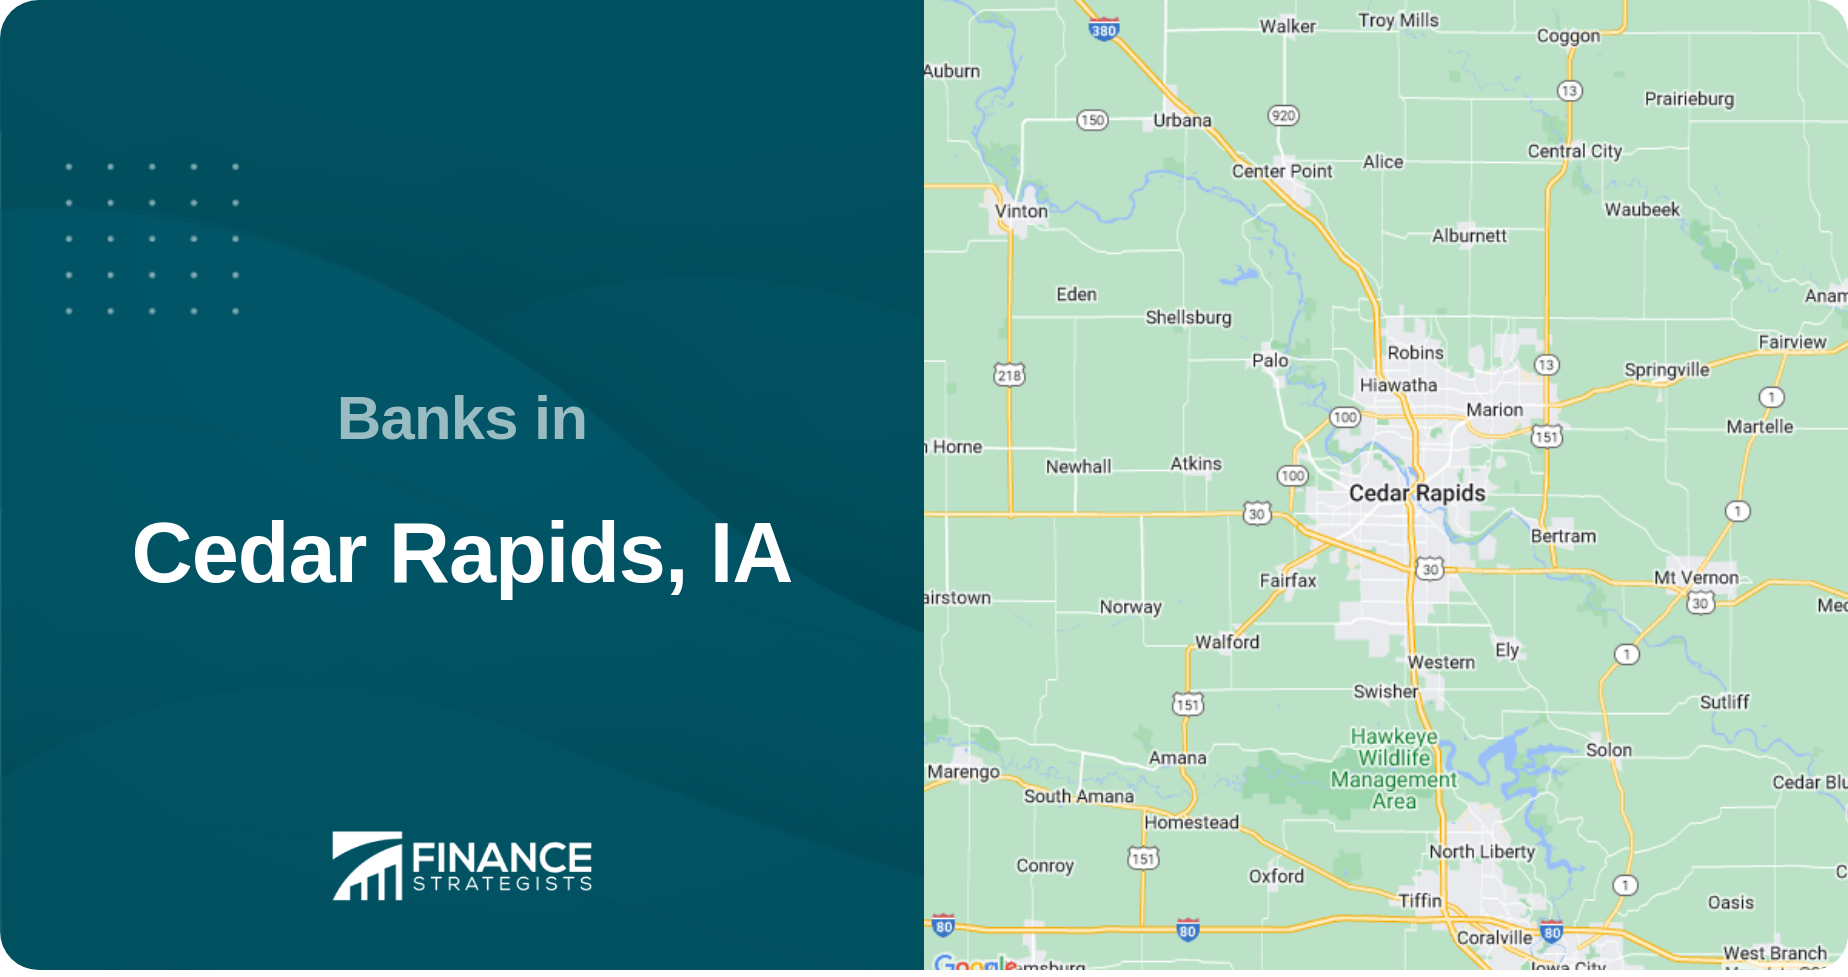 Banks in Cedar Rapids, IA